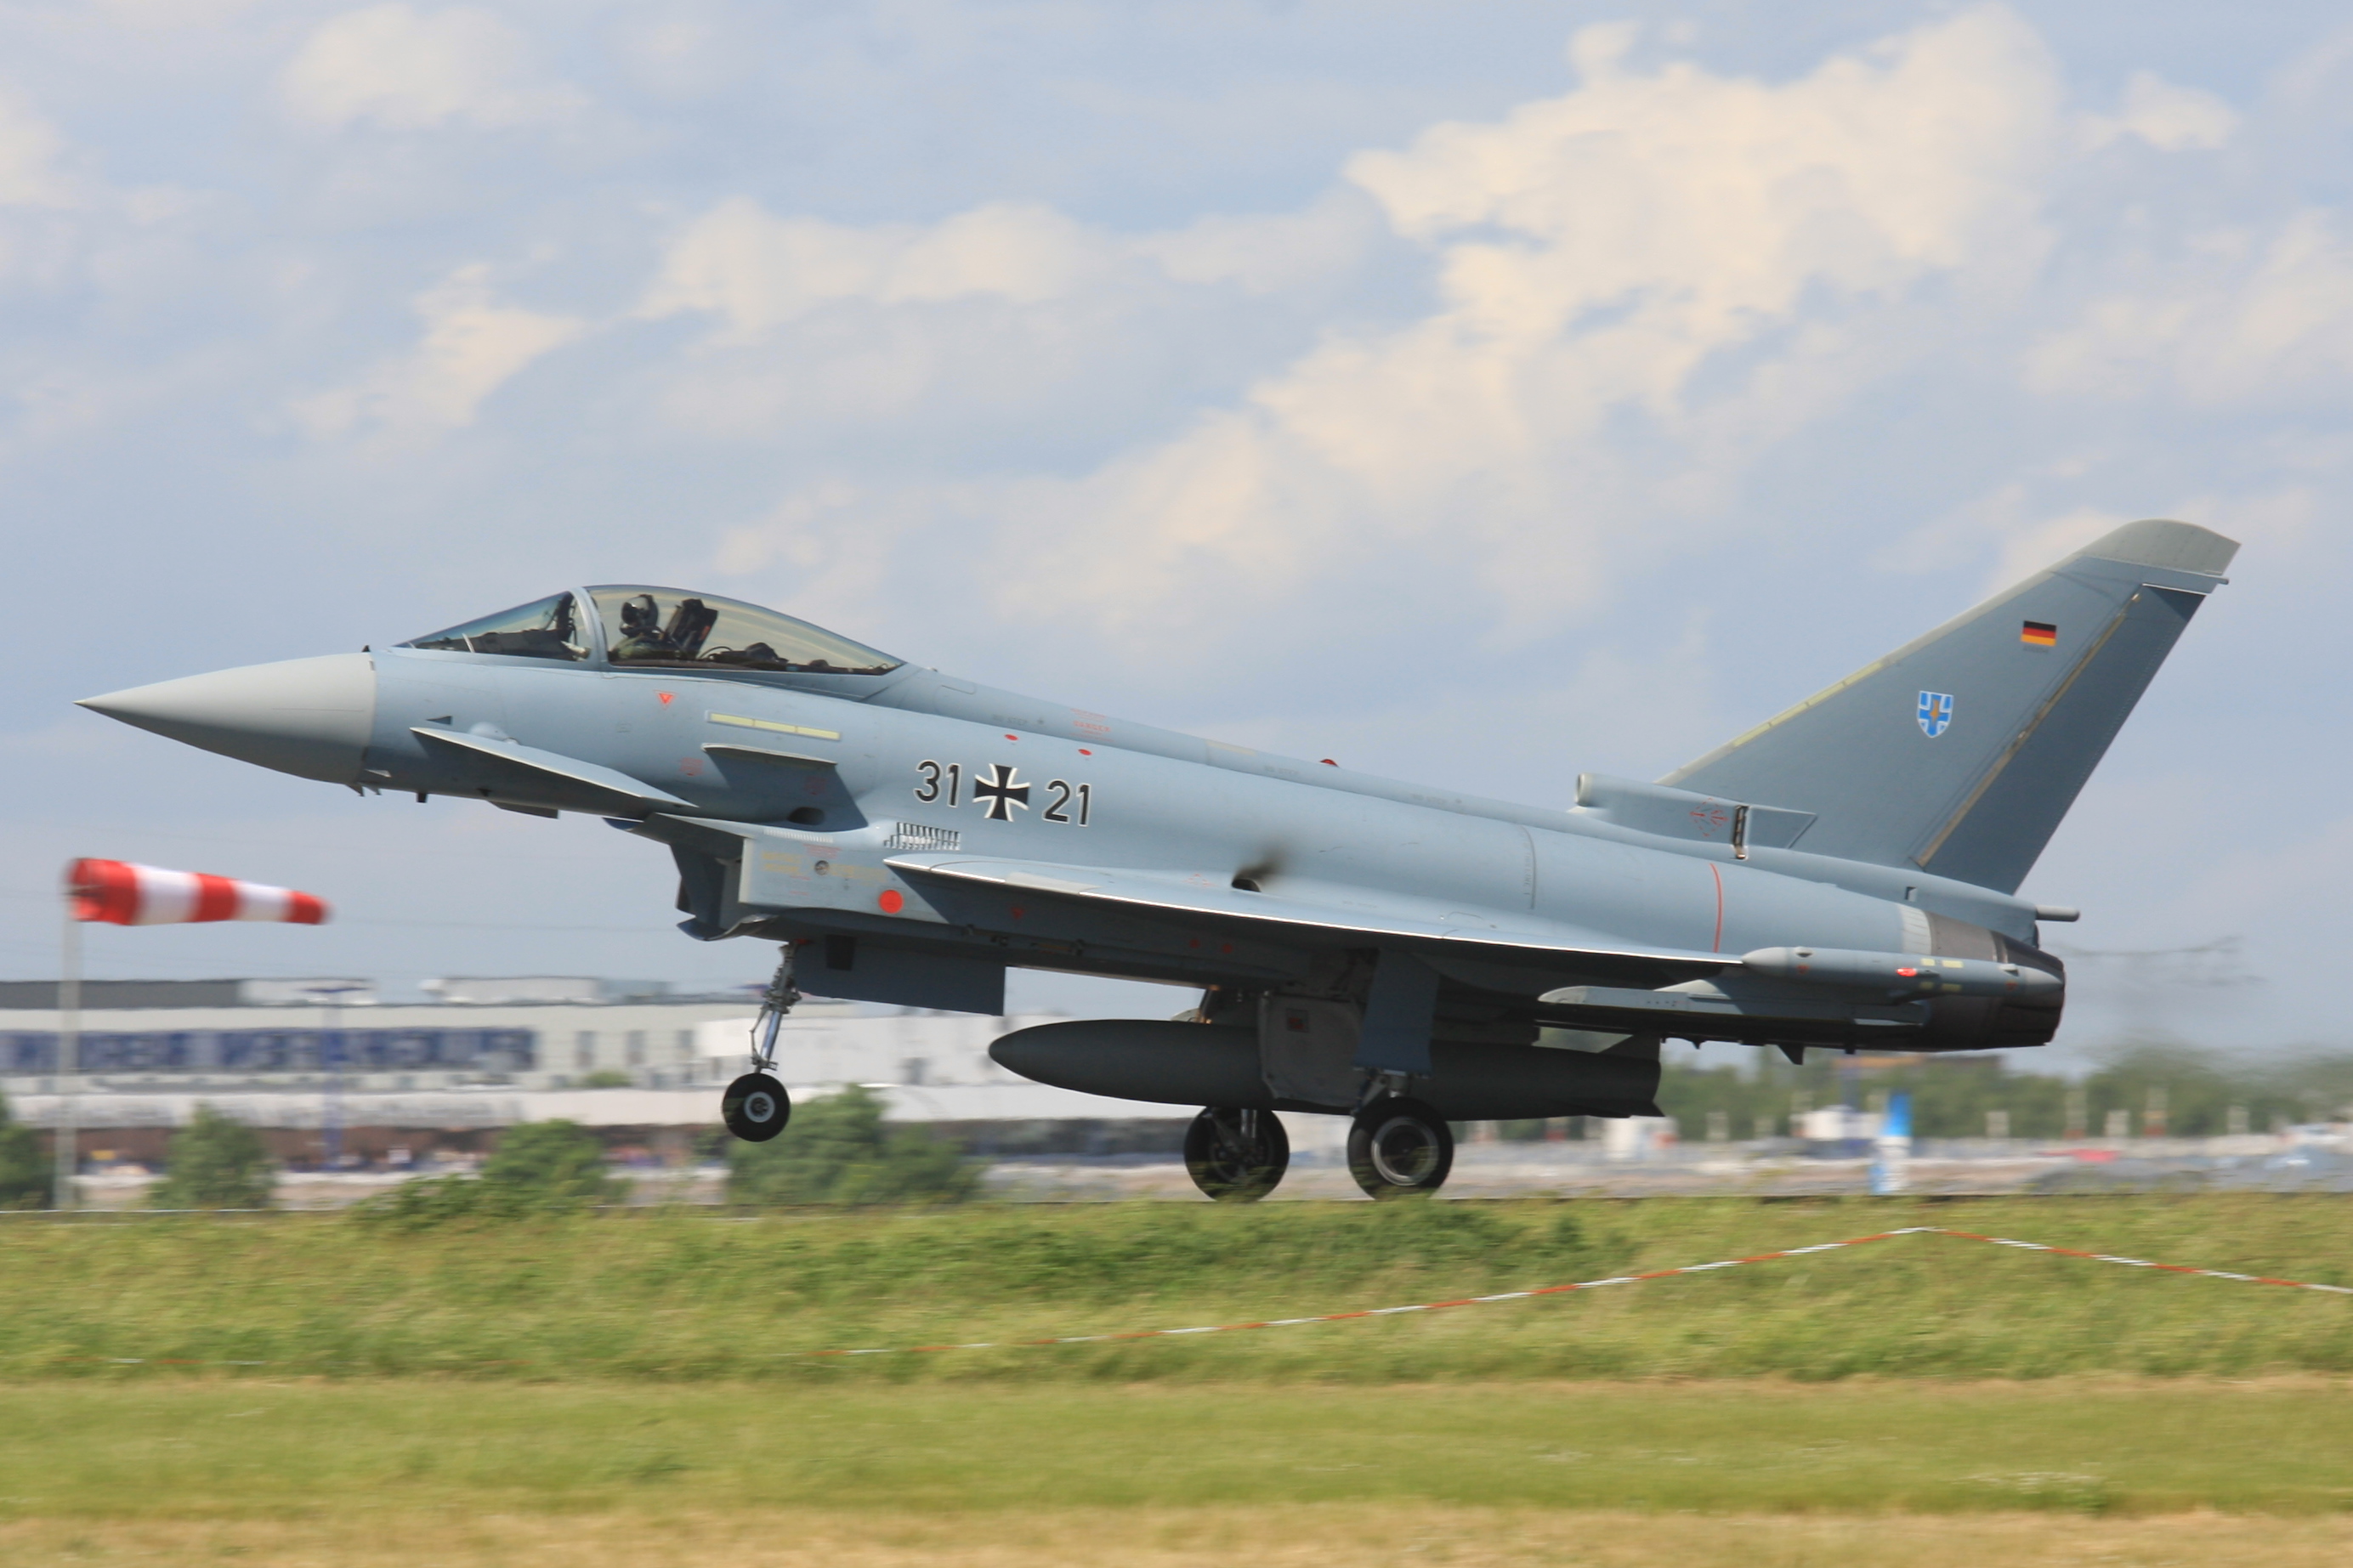 2010-06-11_Eurofighter_Luftwaffe_31%2B21_EDDB_01.jpg